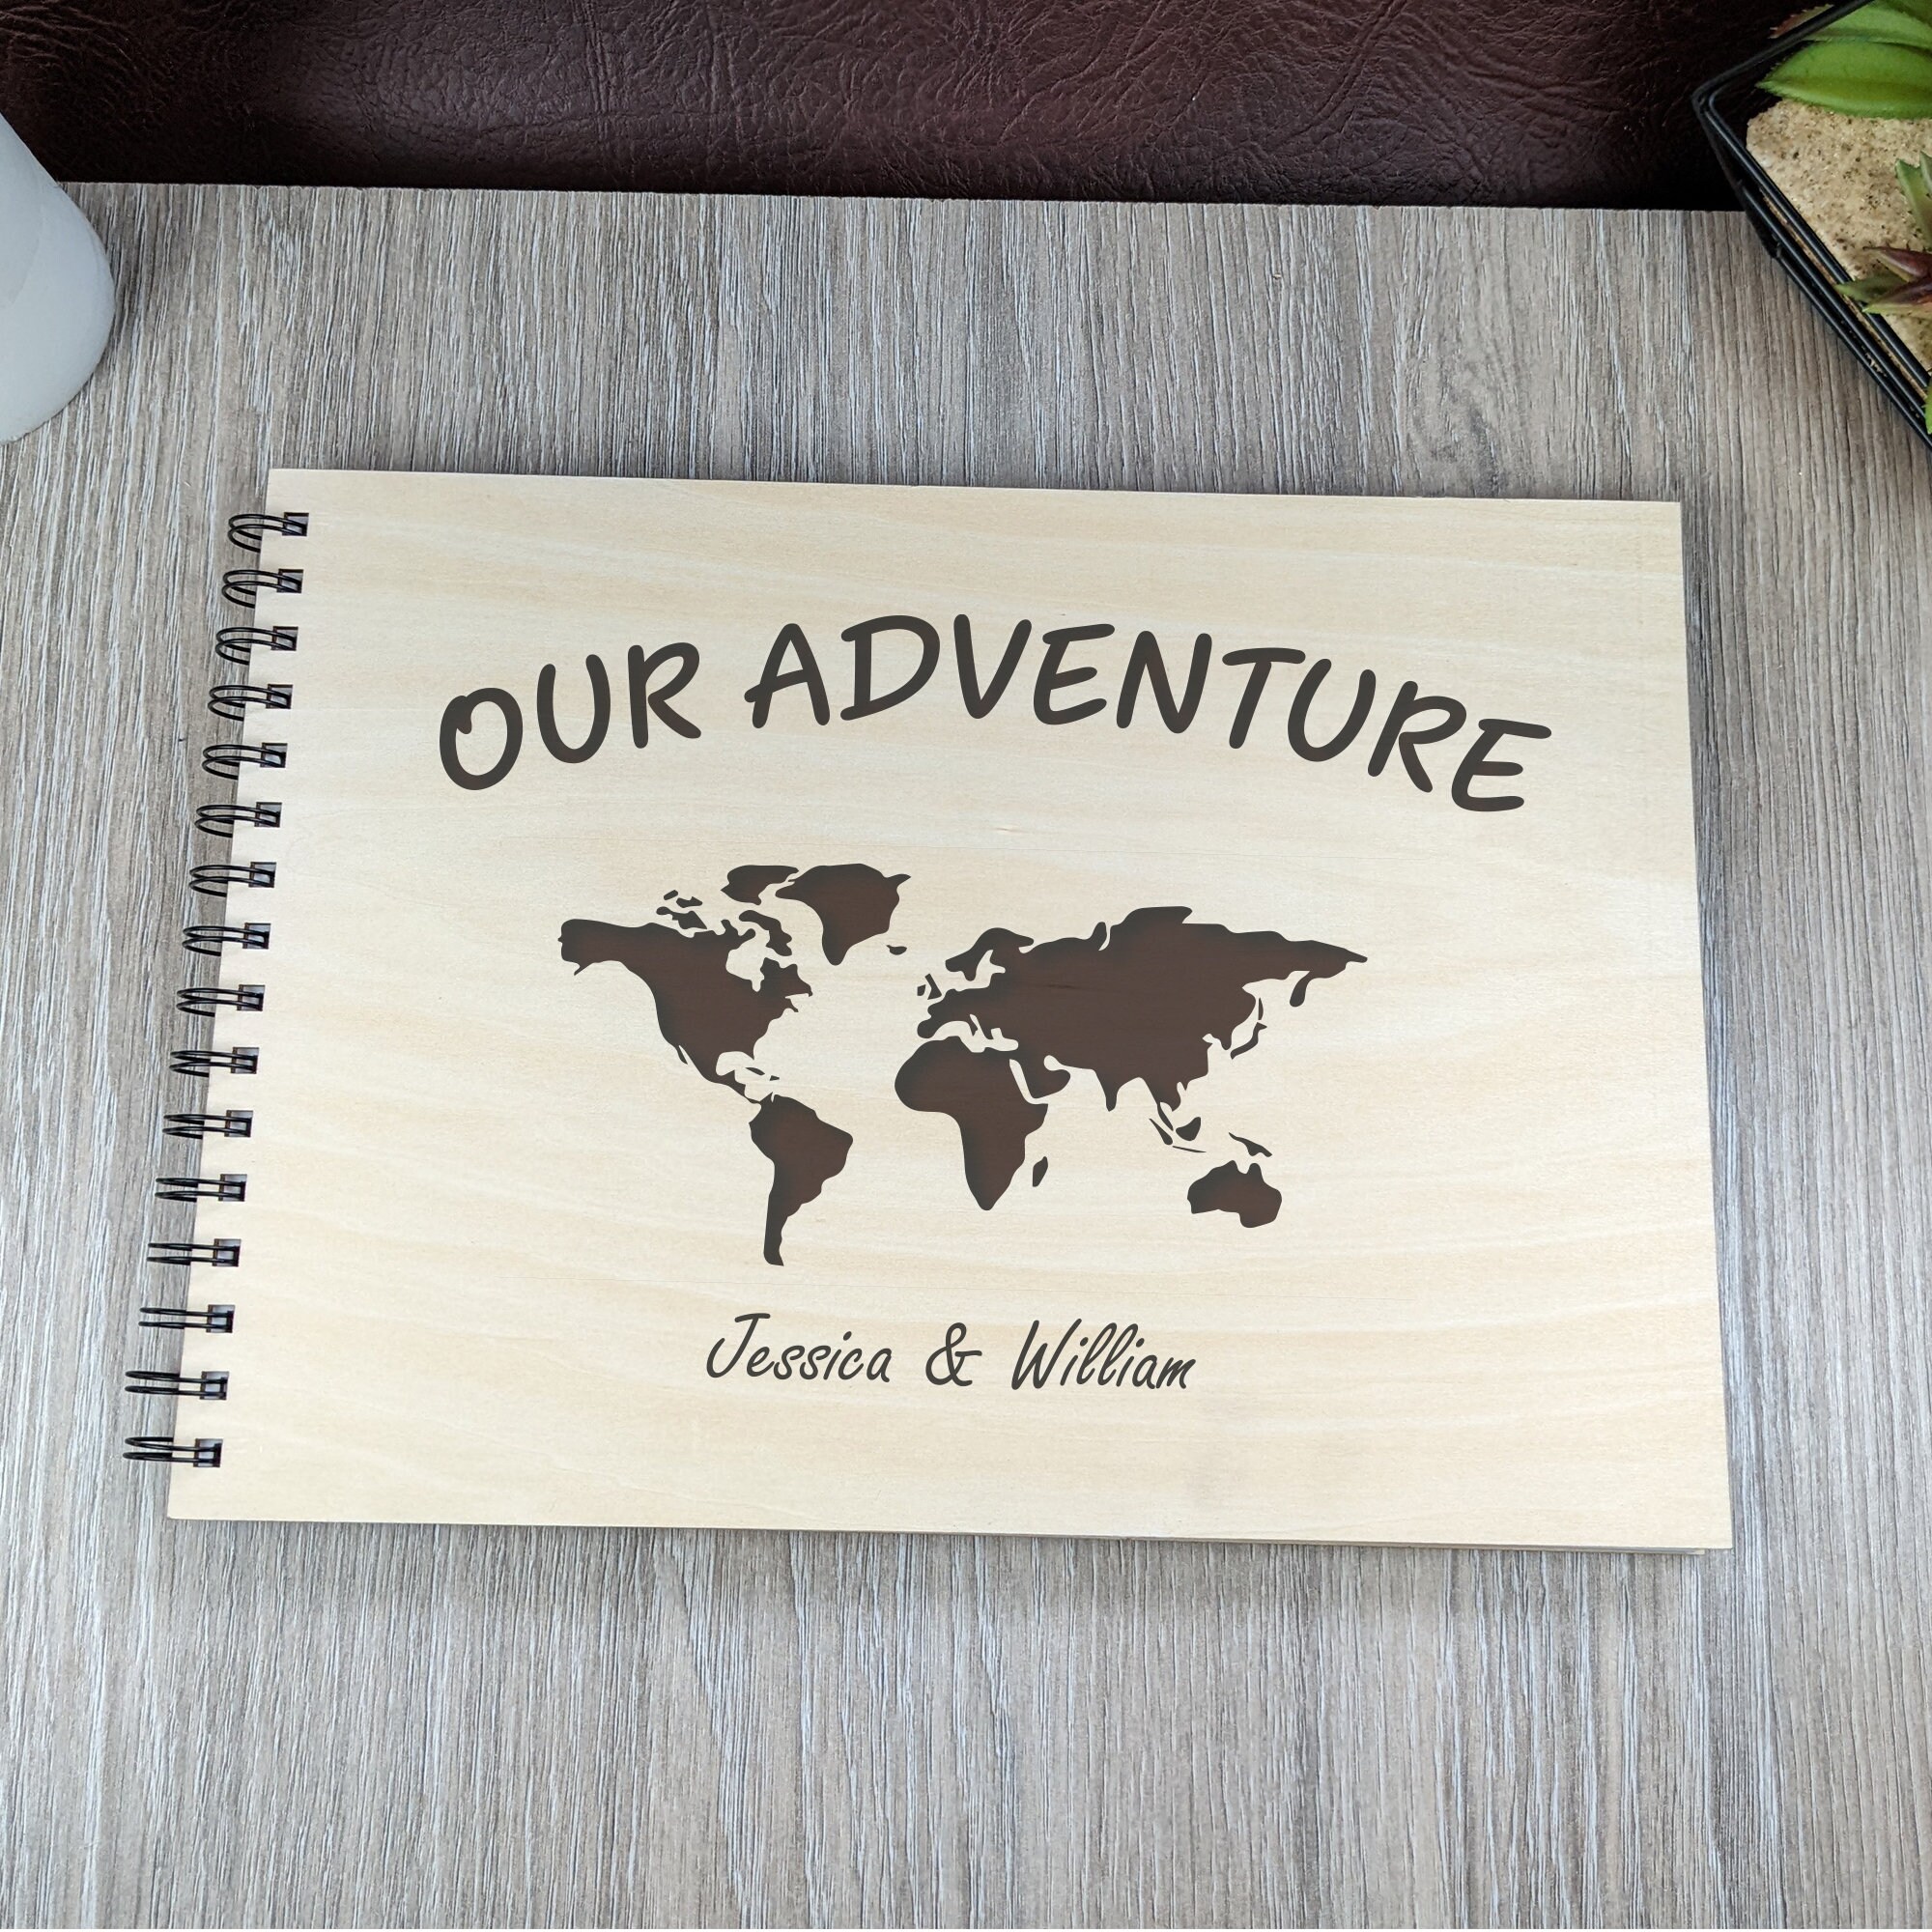 Feiyu Buy Our Adventure Book Travel Diary Photo Book,Scrapbook, Photo Album,Retro Style Travel Souvenir, Vintage Guestbook DIY Annivers